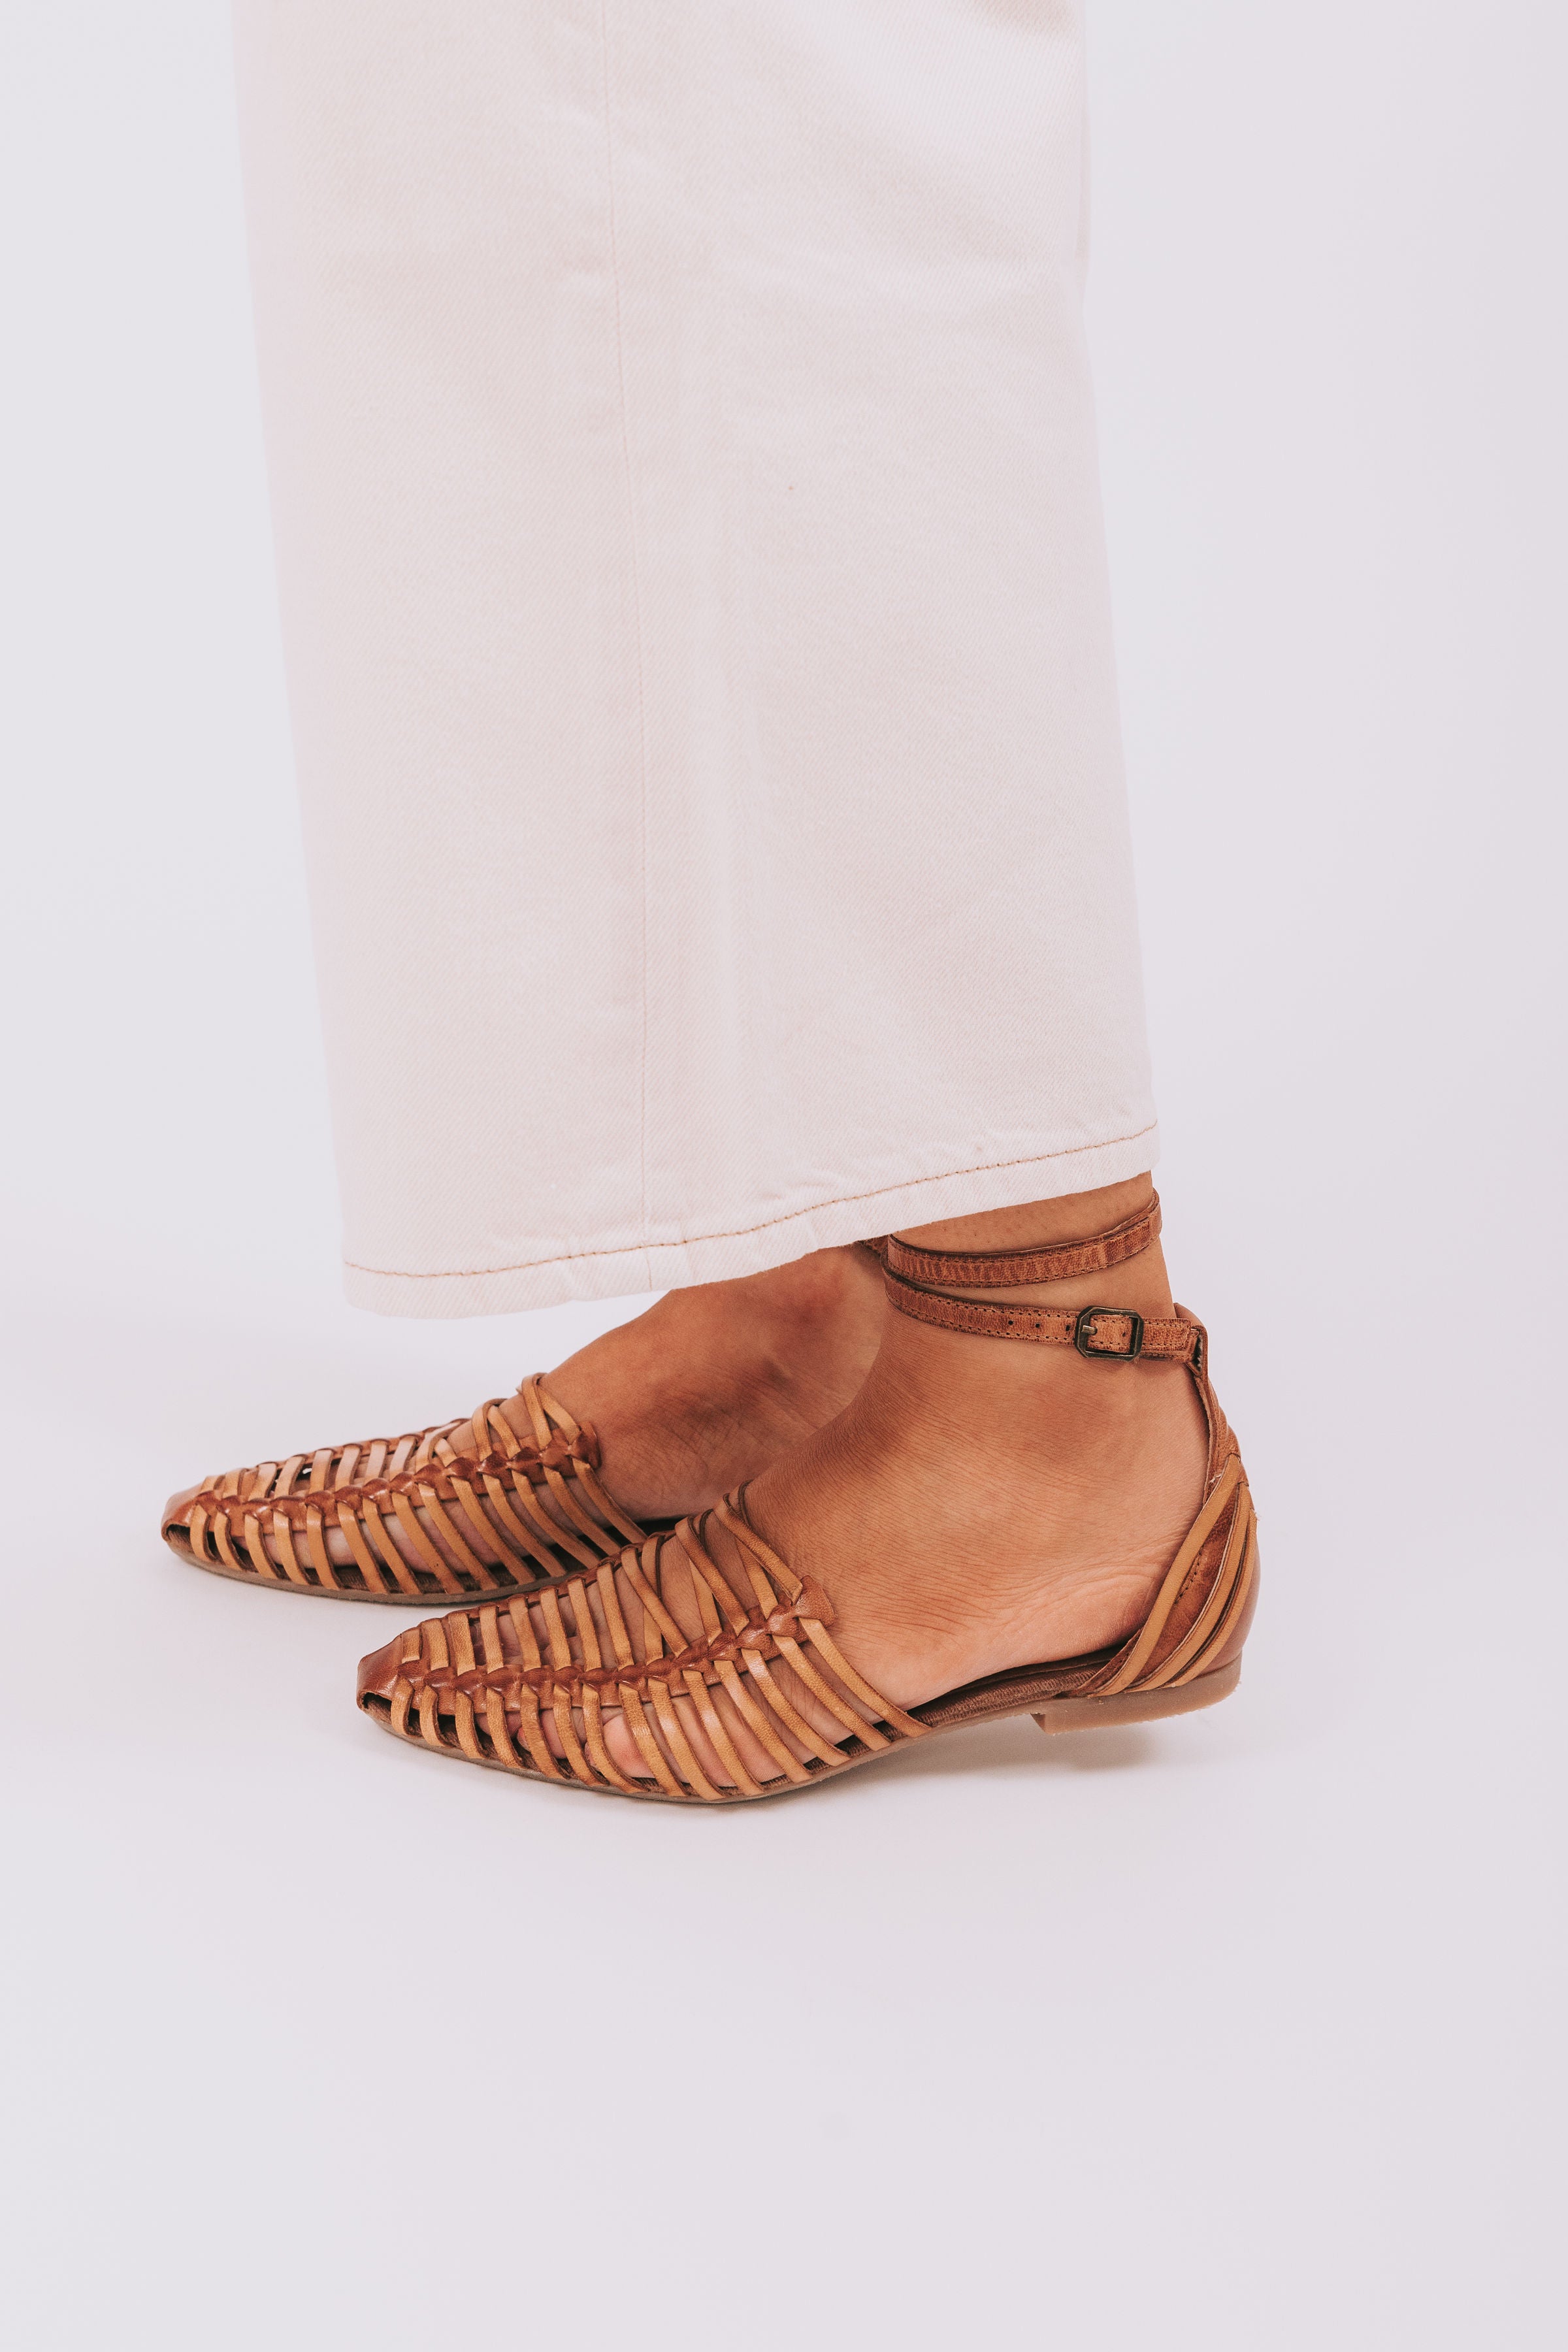 SEYCHELLES - Trinket Cognac Leather Sandal